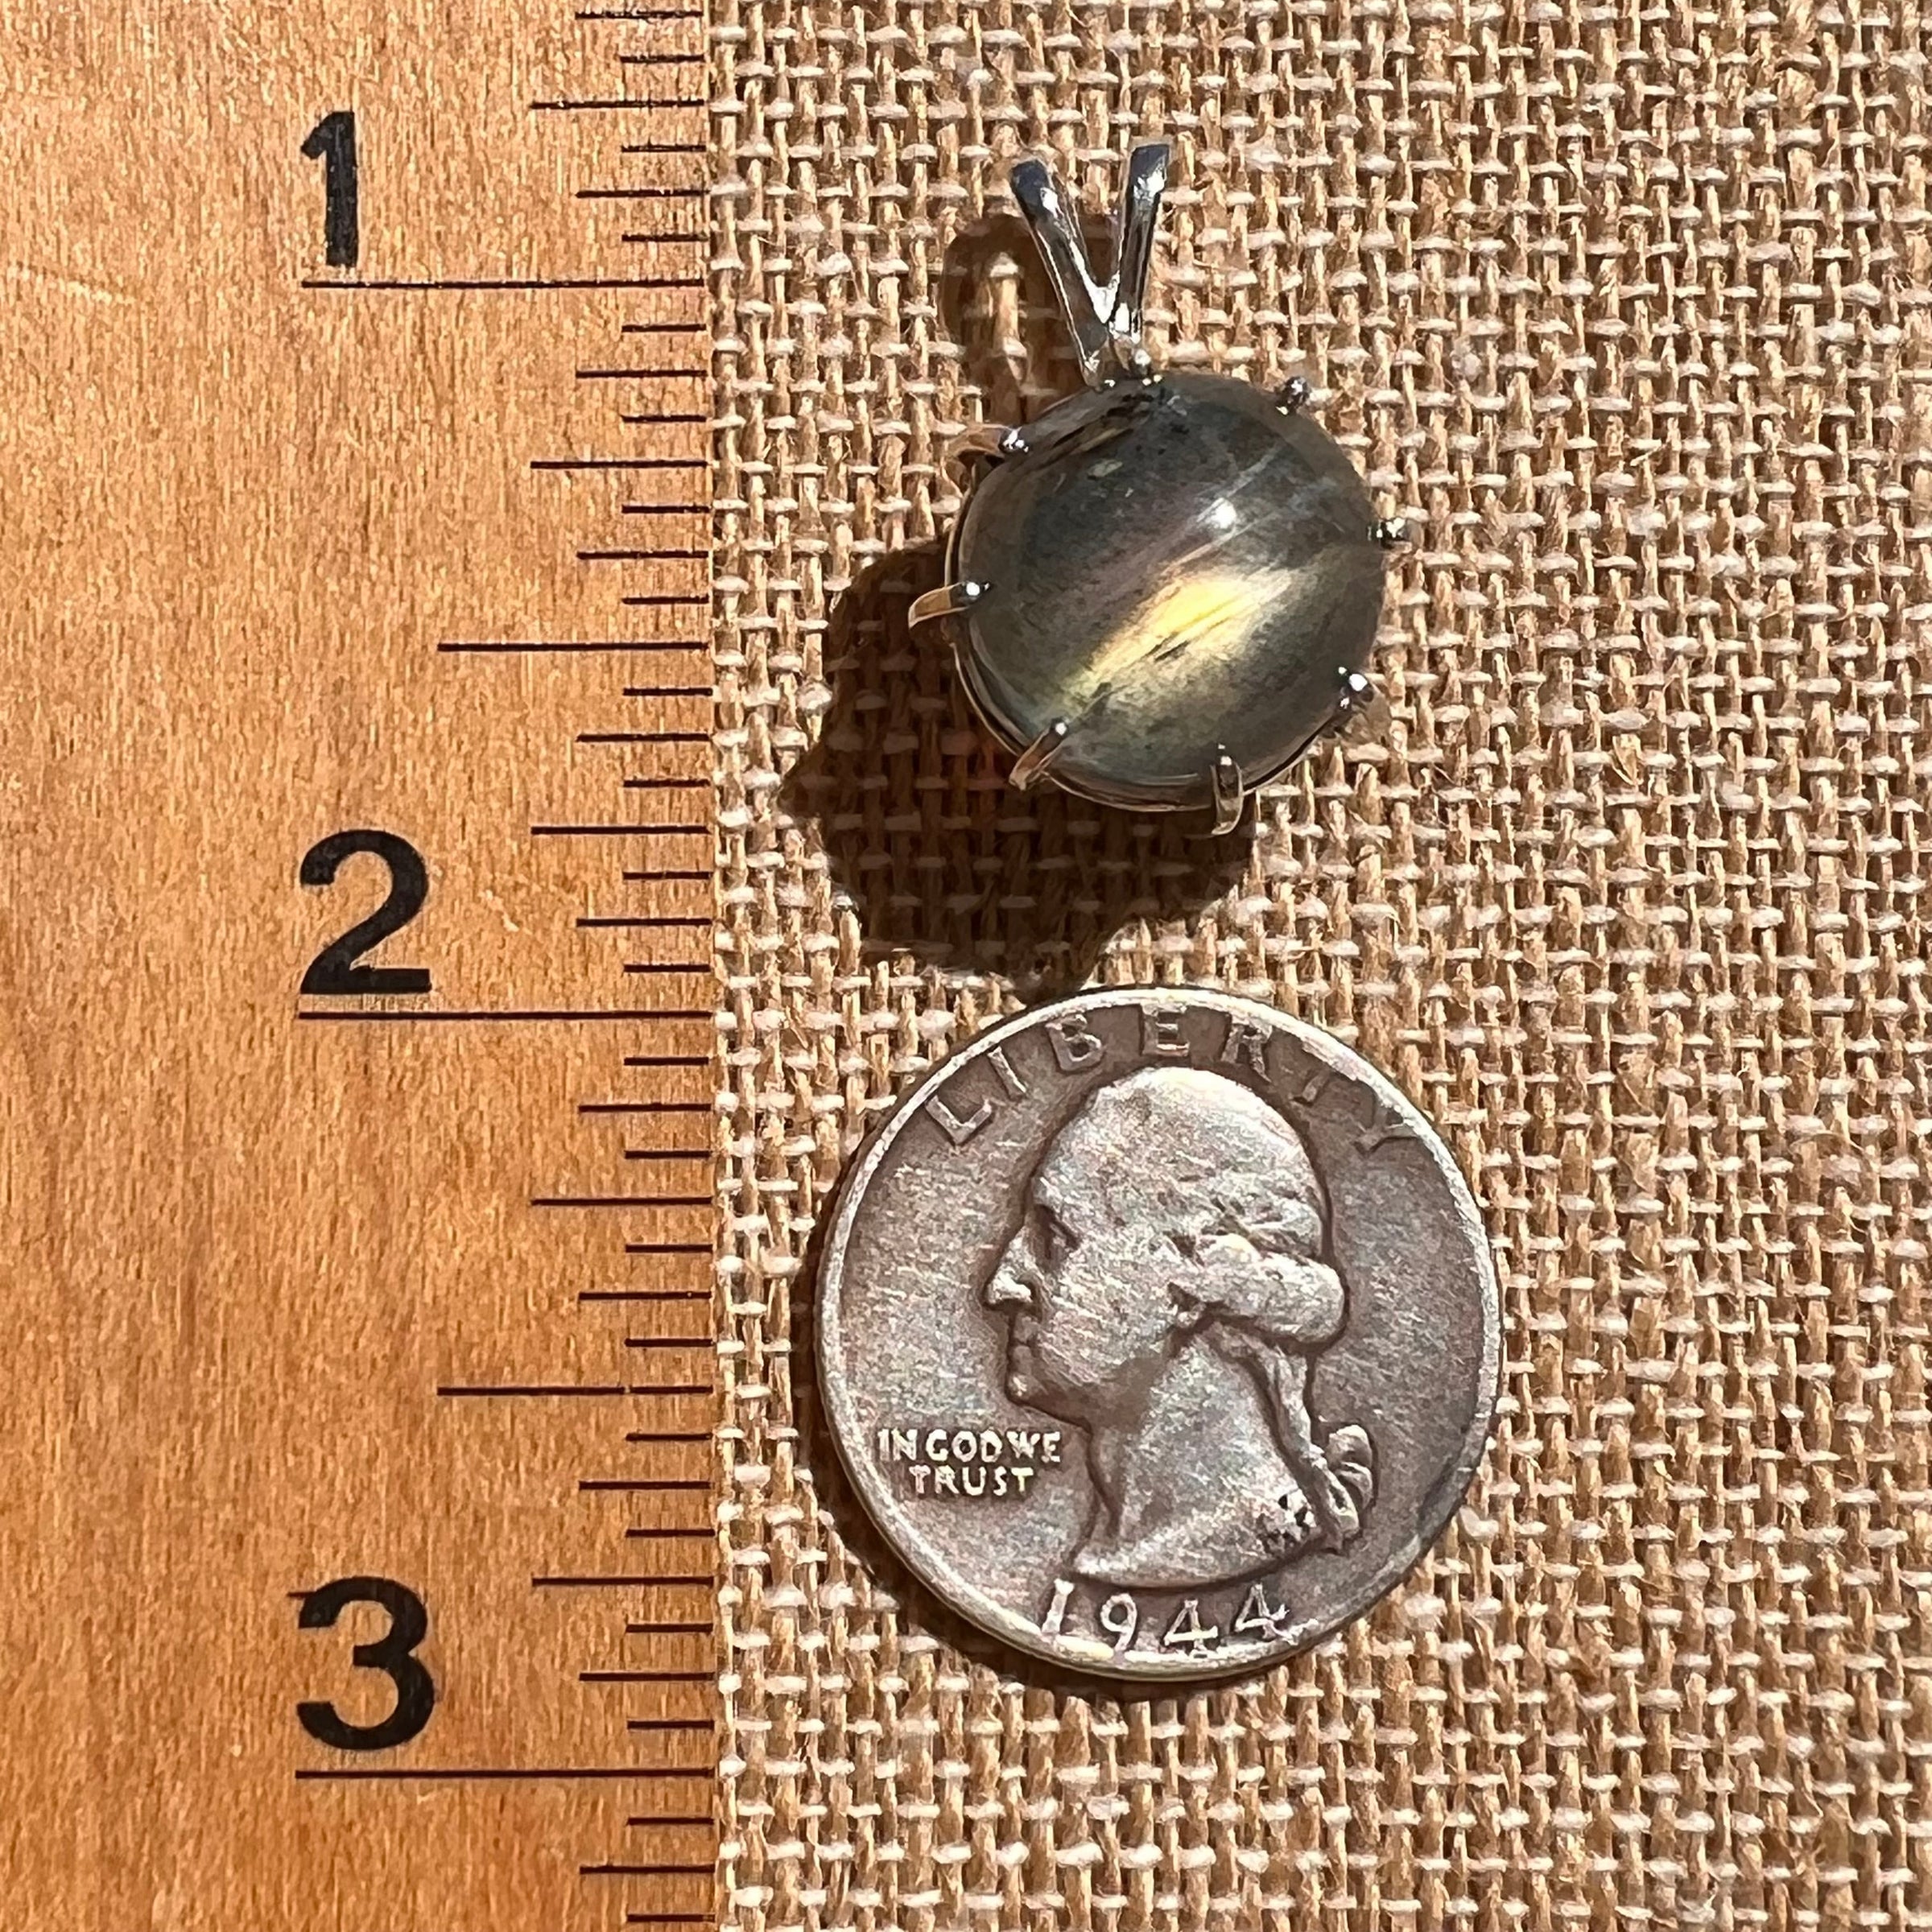 Labradorite Sphere Pendant Sterling Silver #5605-Moldavite Life